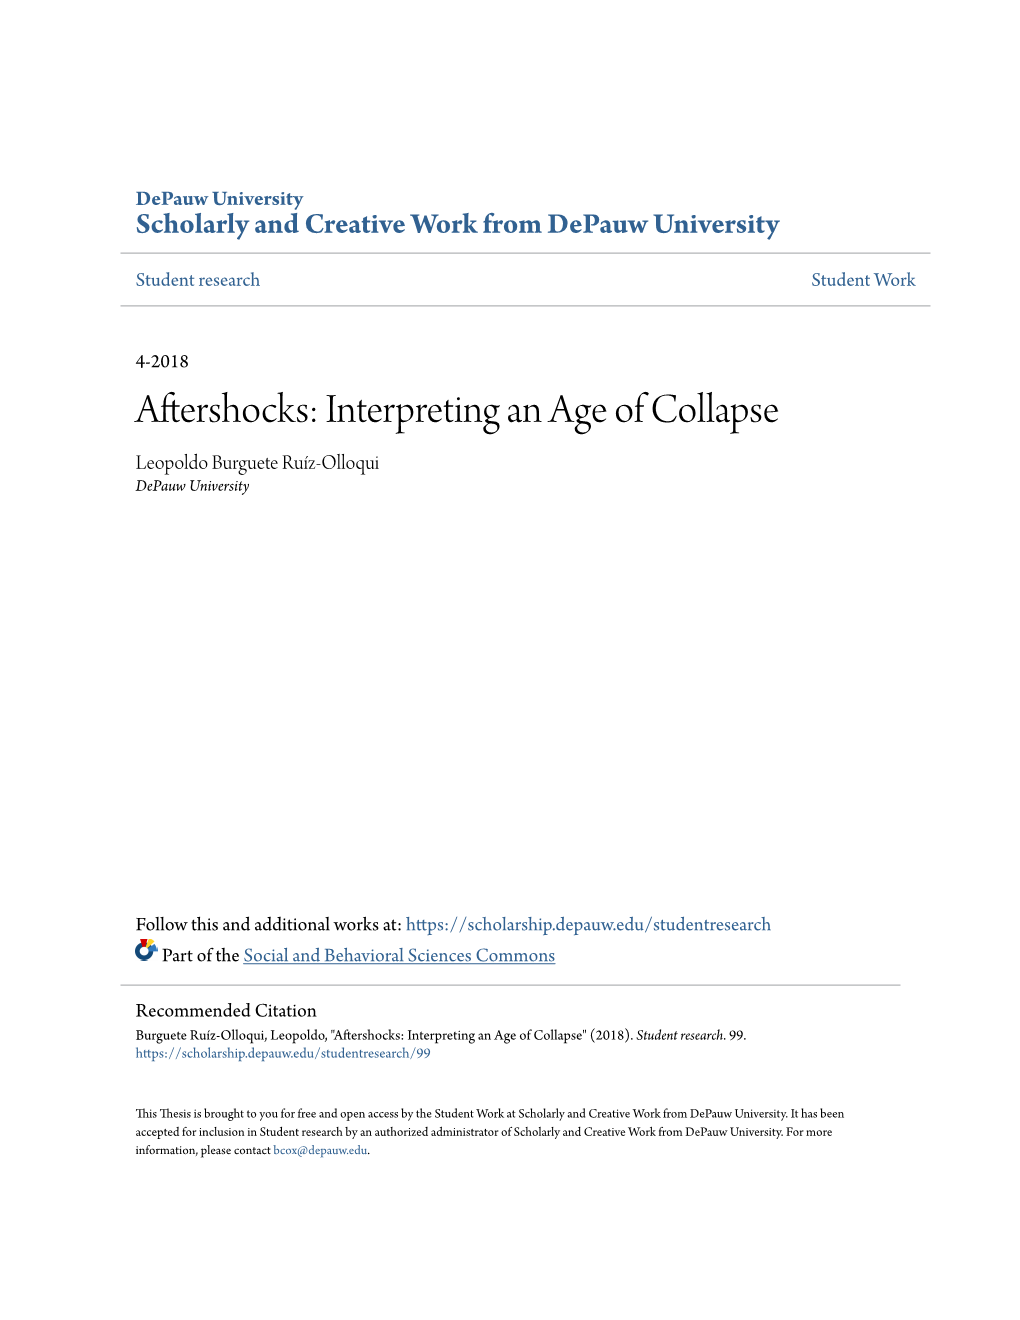 Aftershocks: Interpreting an Age of Collapse Leopoldo Burguete Ruíz-Olloqui Depauw University